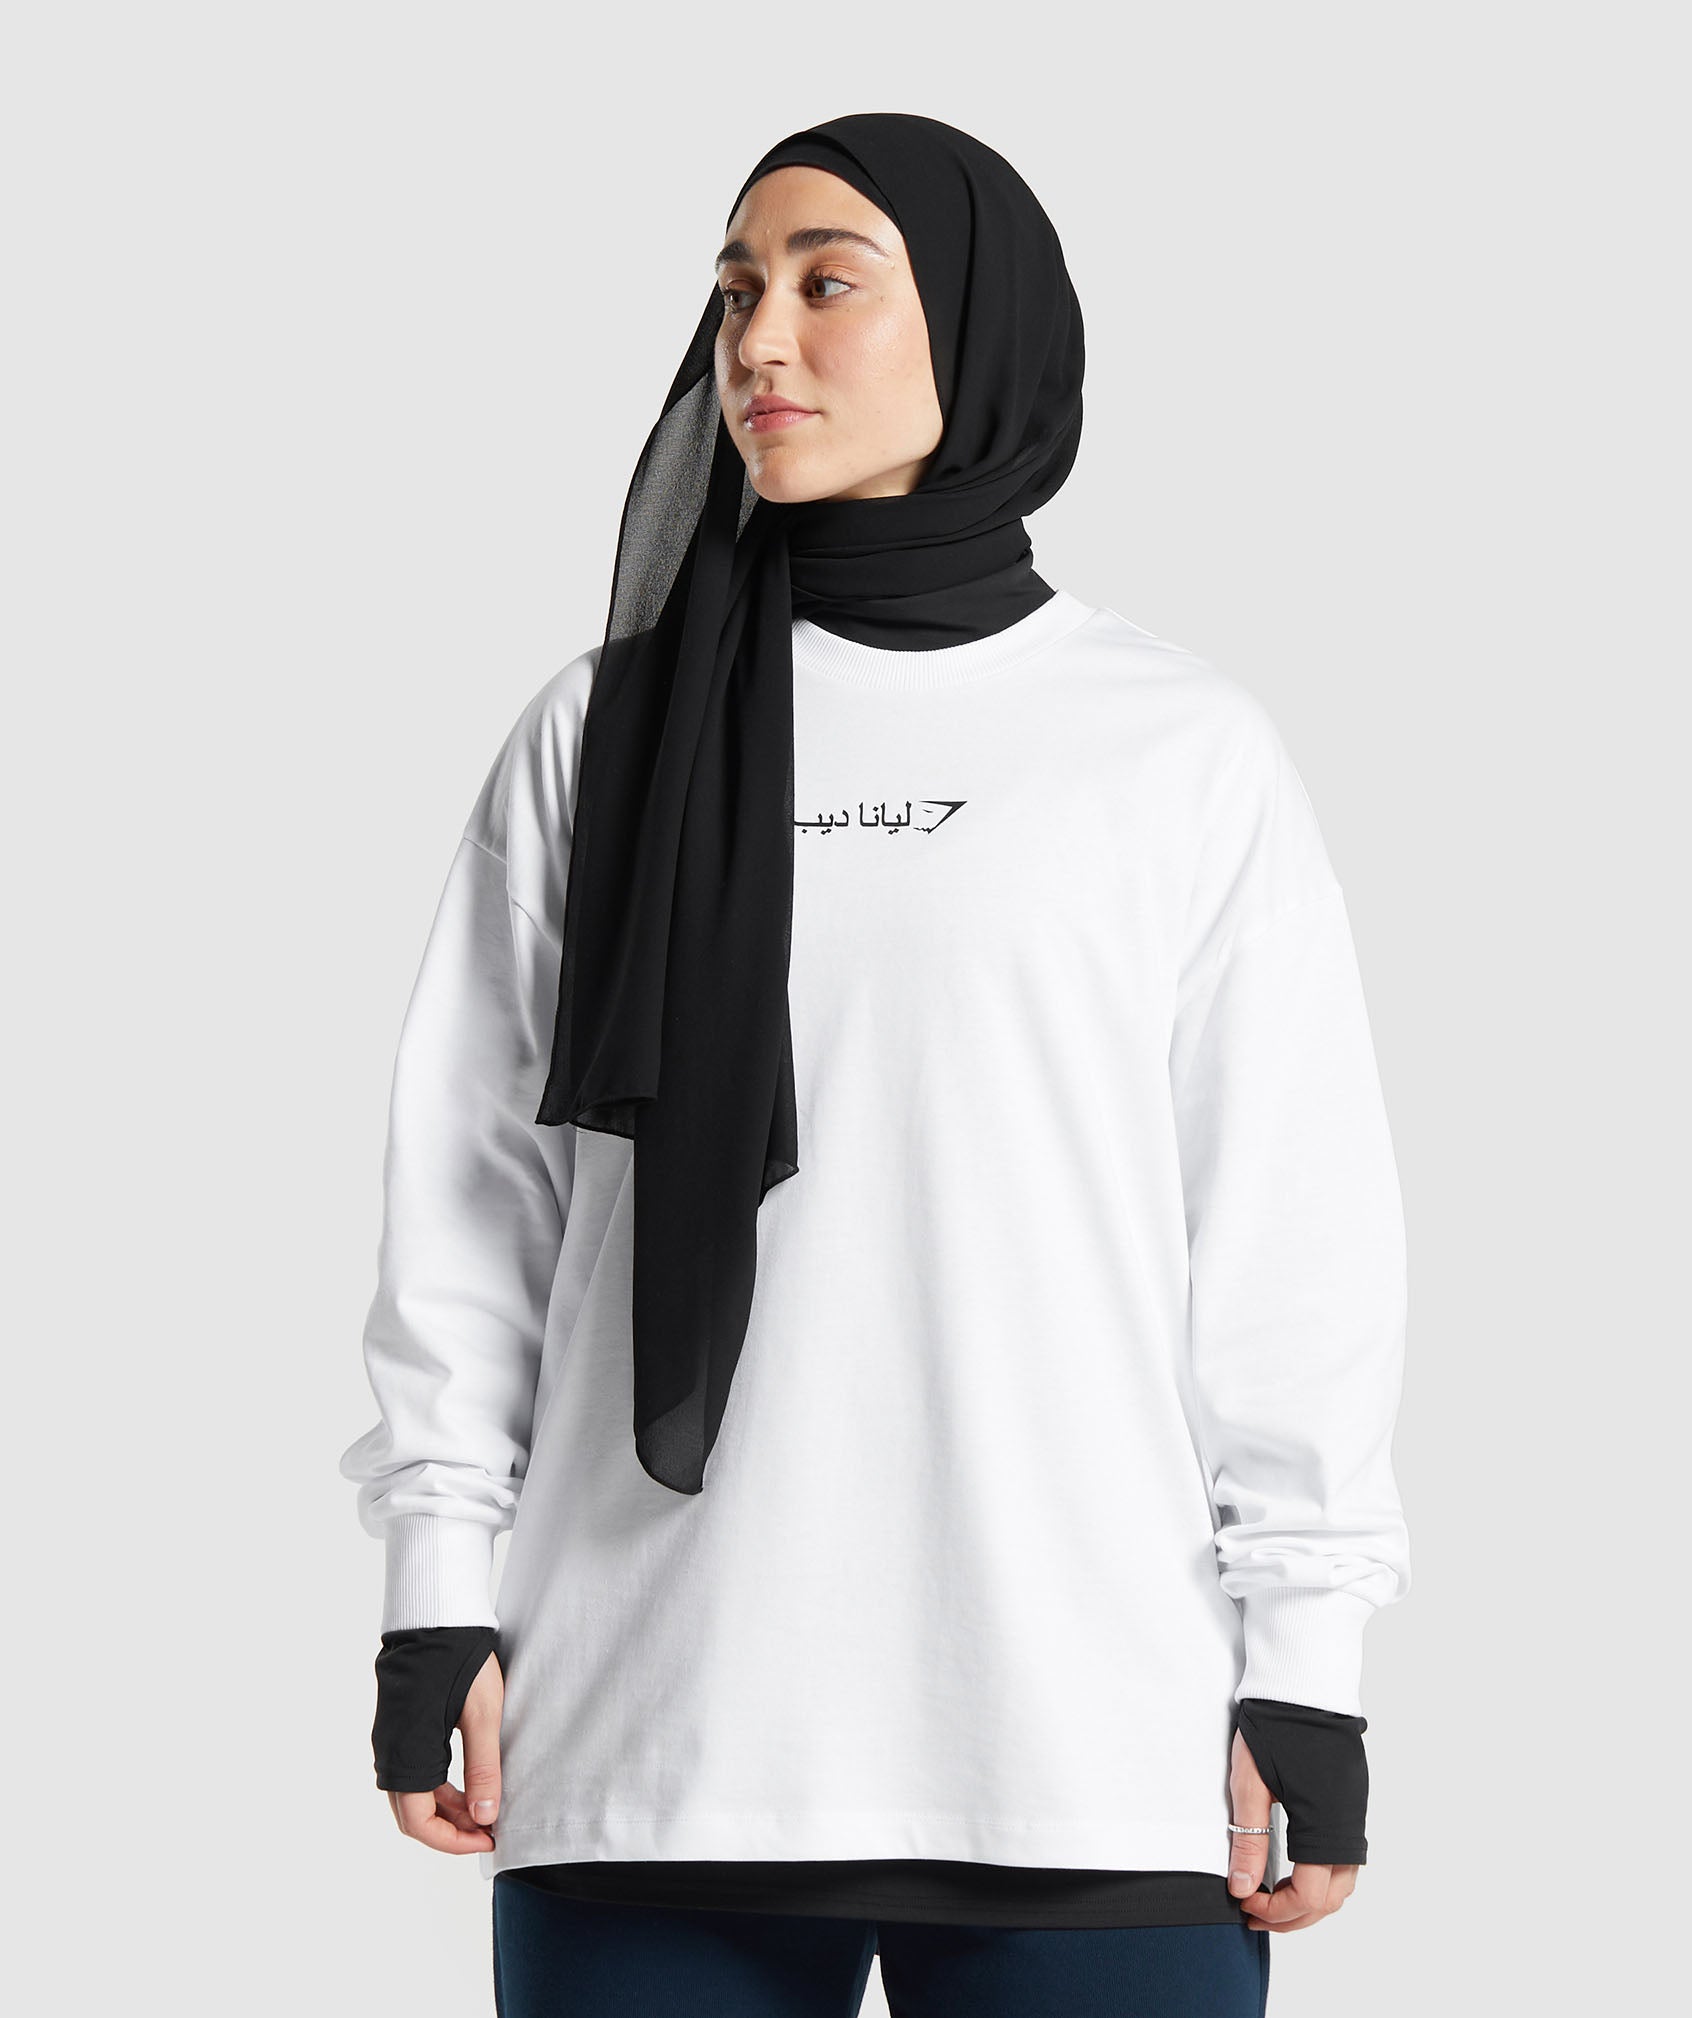 GS X Leana Deeb Oversized Long Sleeve Top in White ist nicht auf Lager